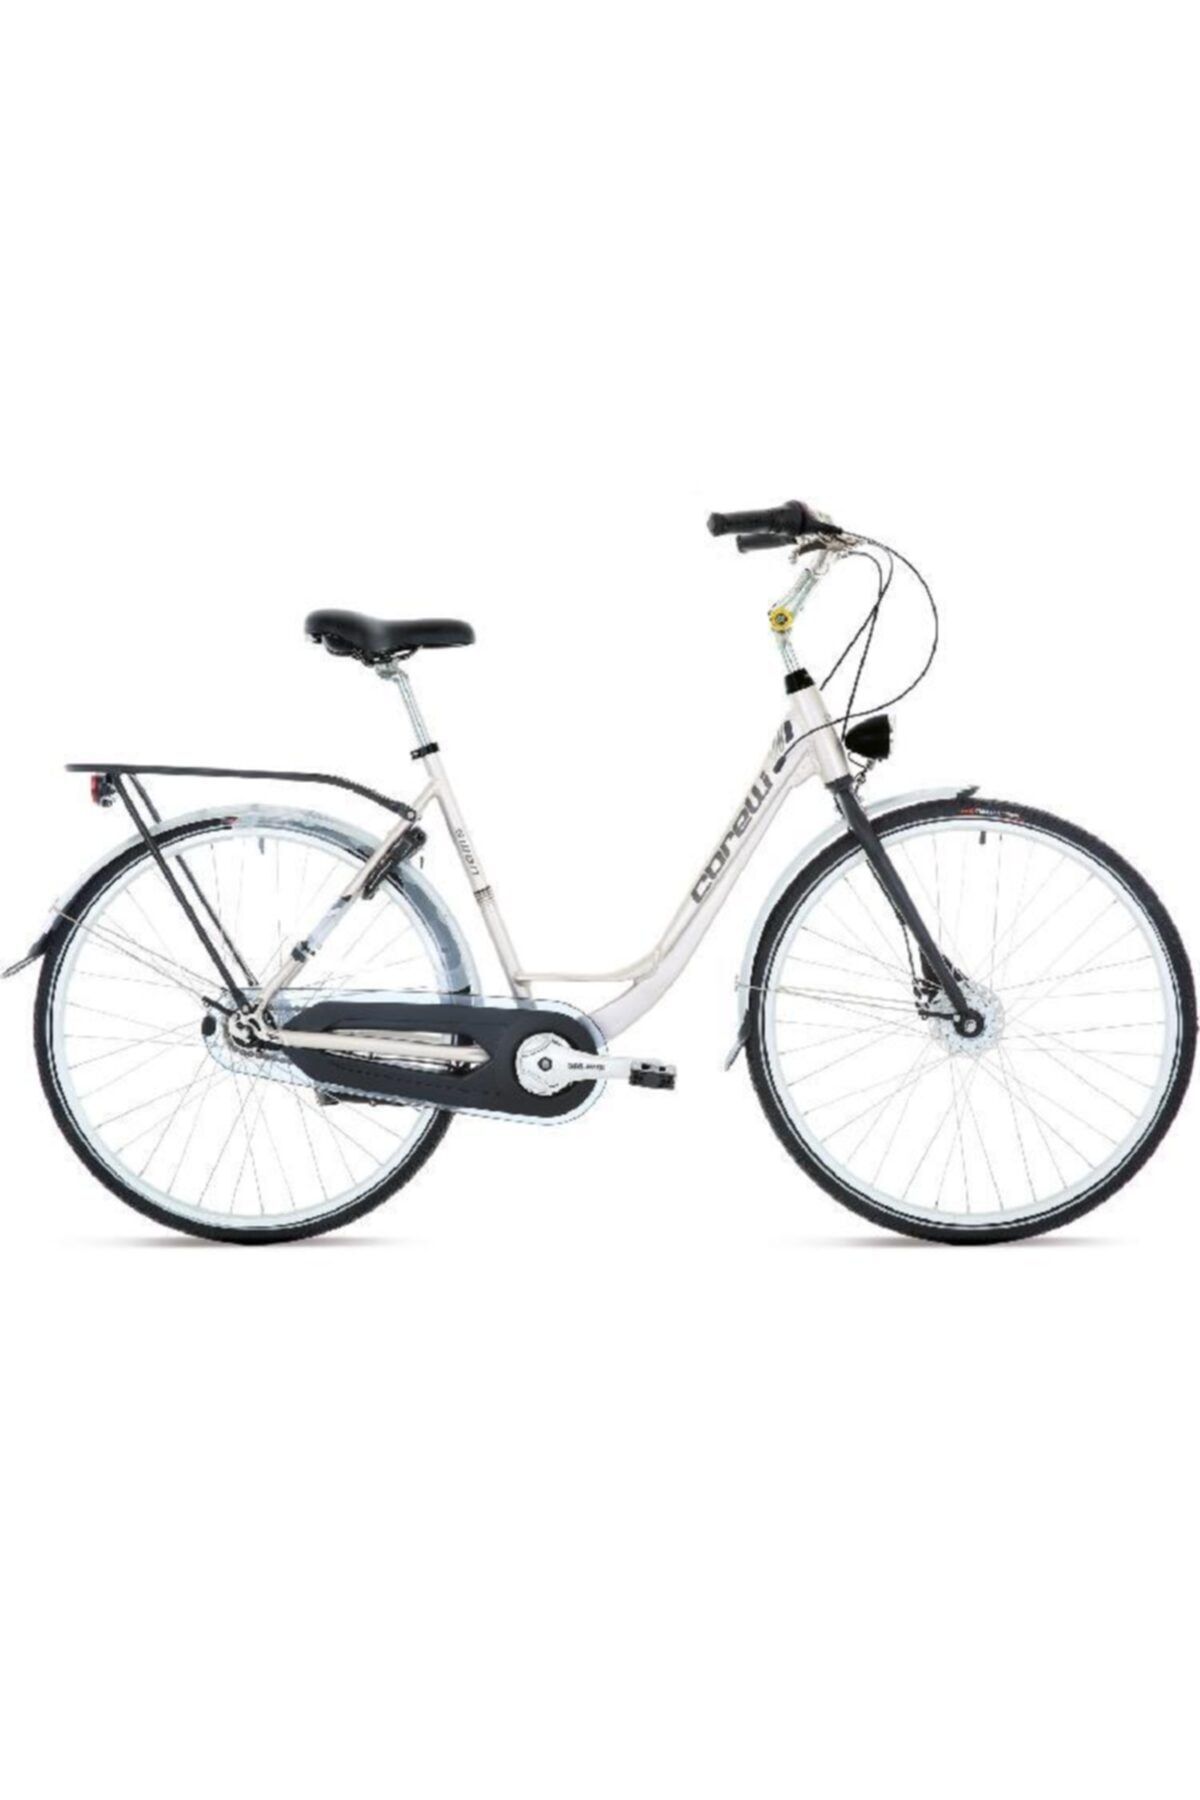 Corelli Swan Bayan Şehir Tur Bisikleti 28 Jant Nexus 7 Vites